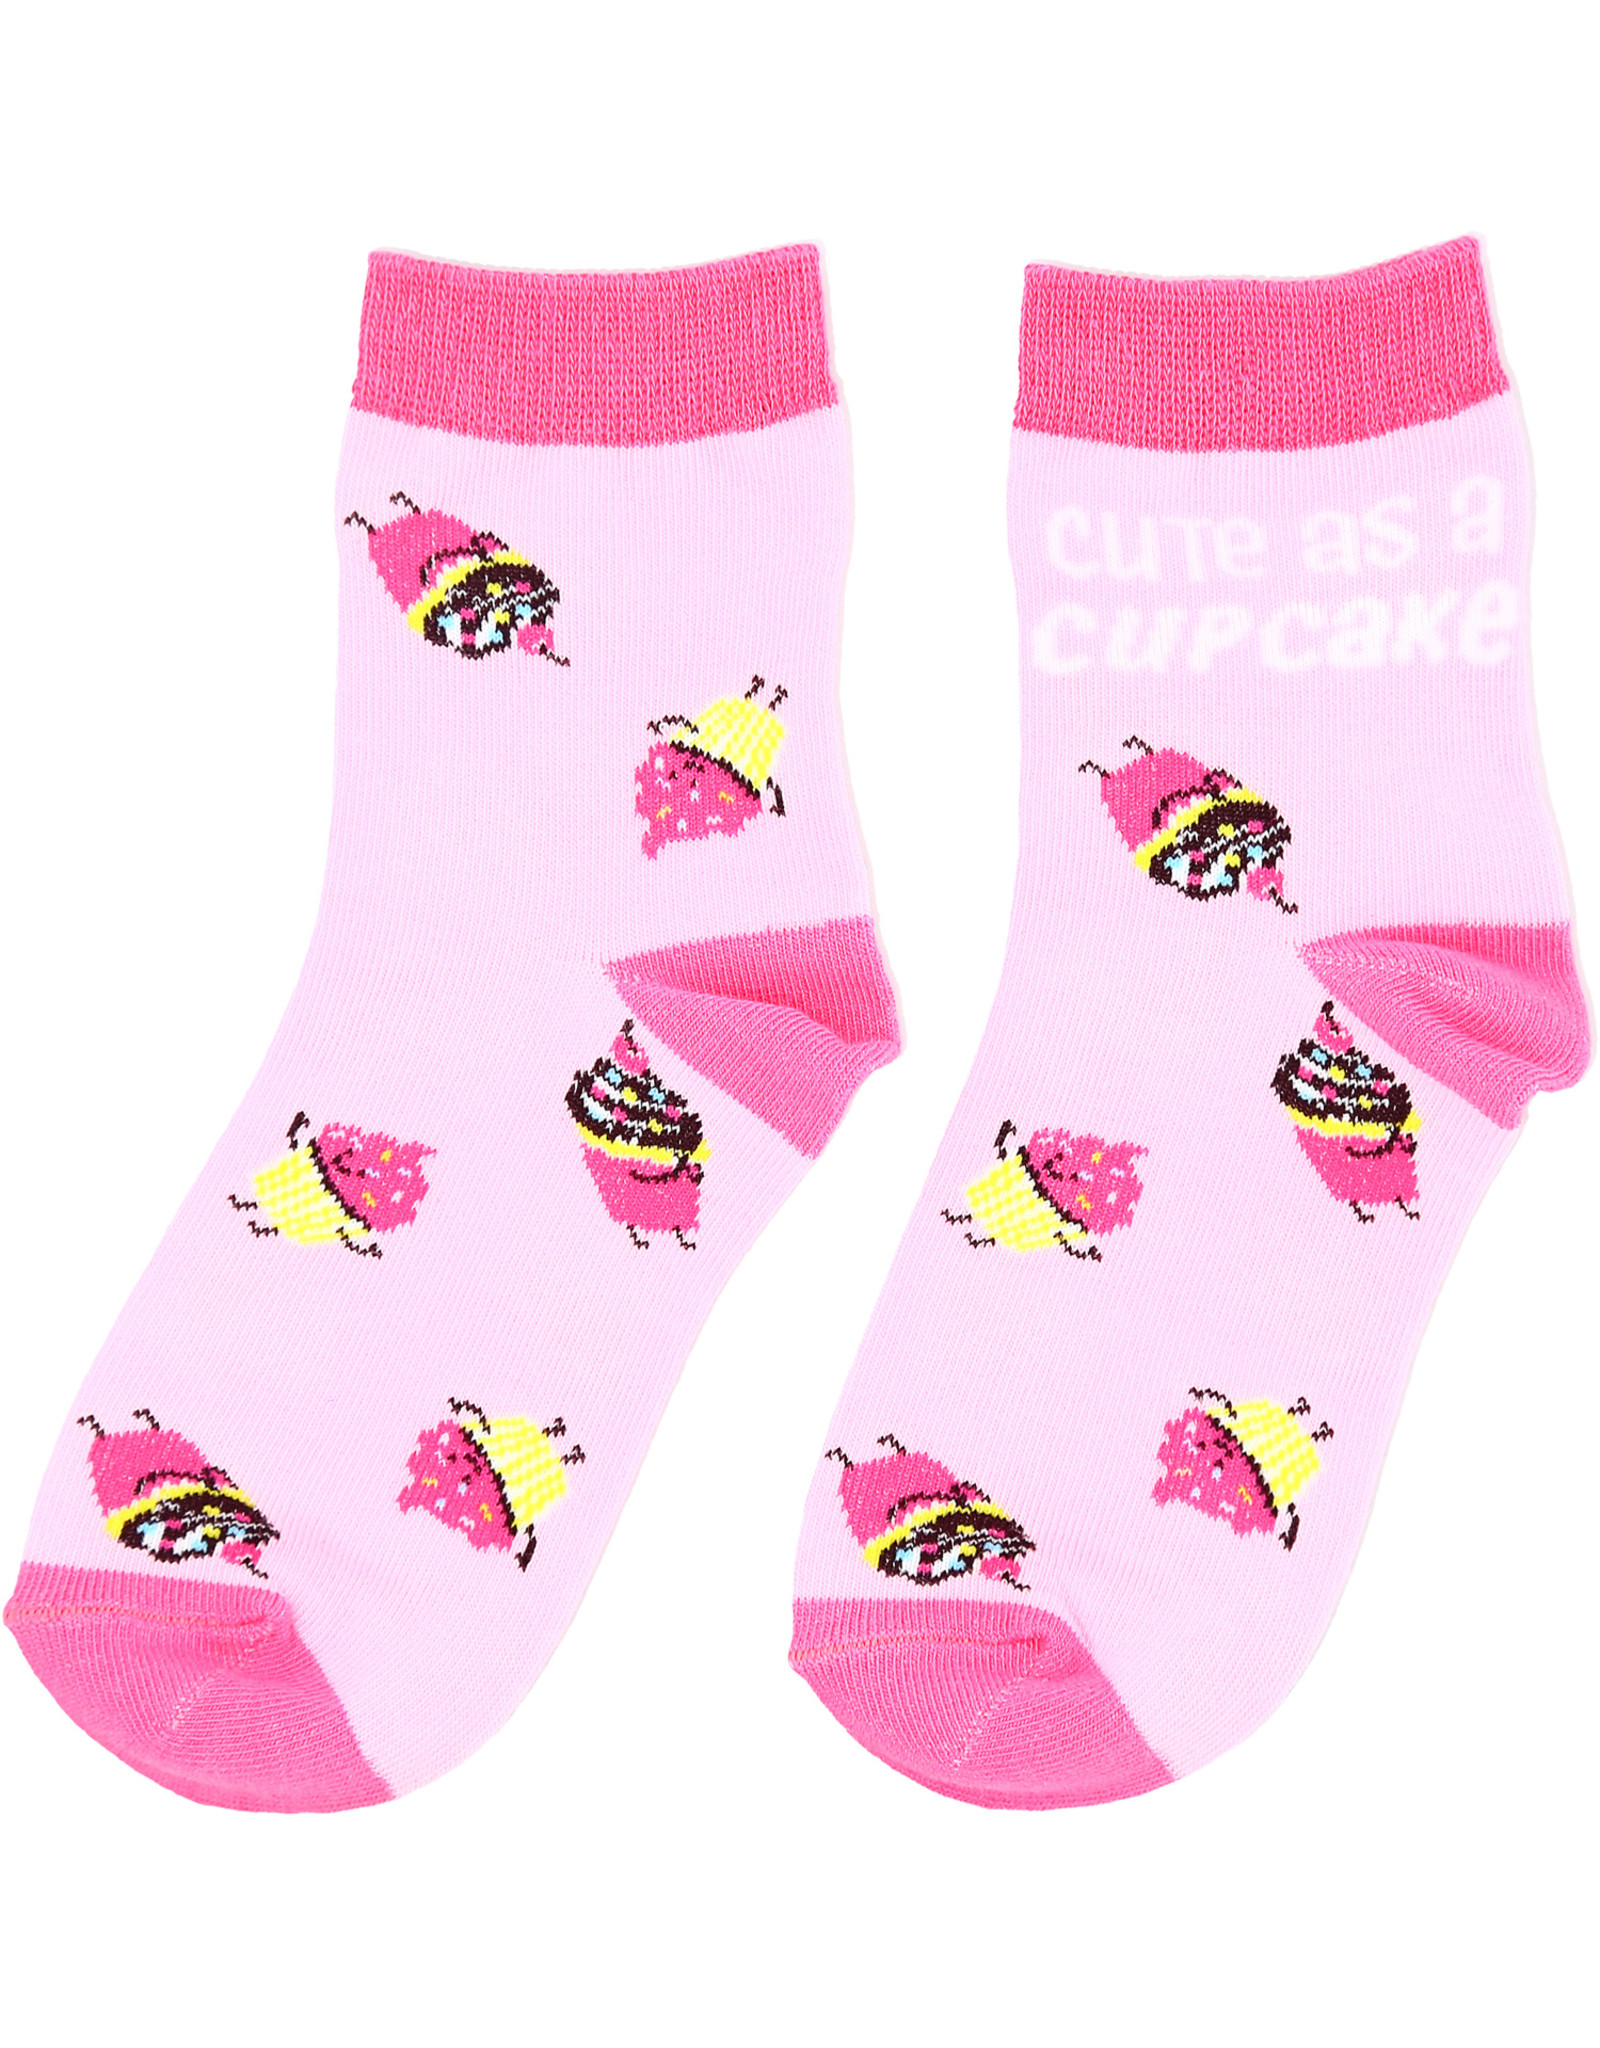 PGC "Cute as a Cupcake" Youth Socks (S/M)